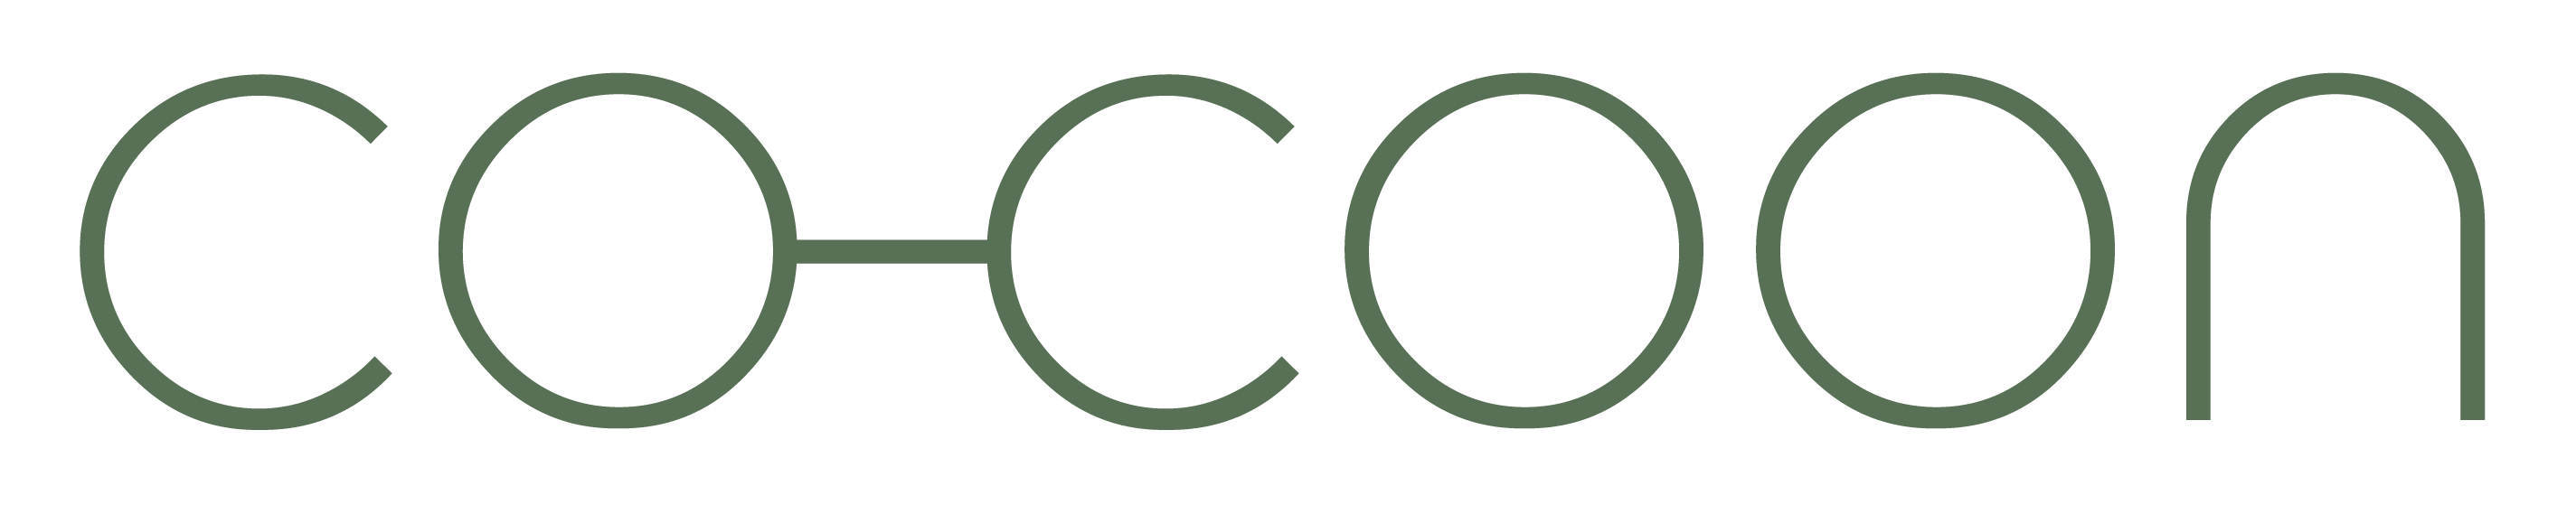 Logo Co-coon groen